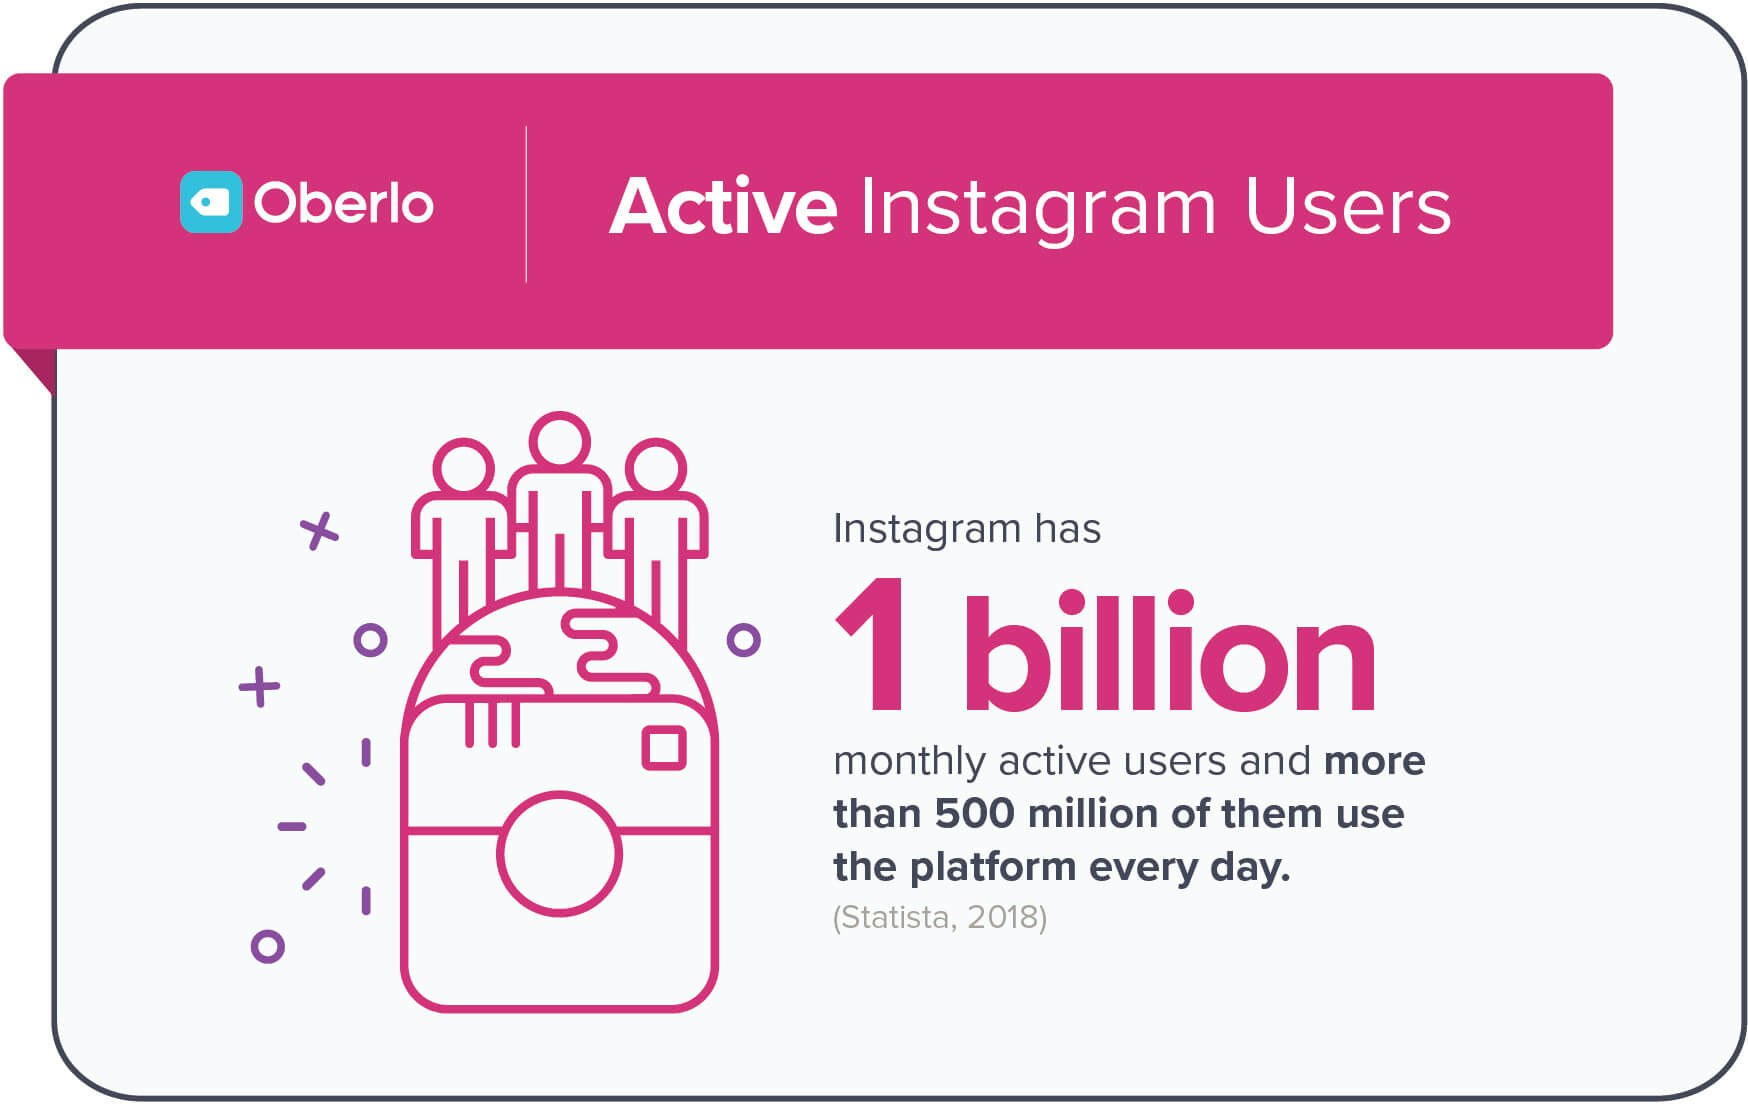 Instagram has 1 billion monthly active users